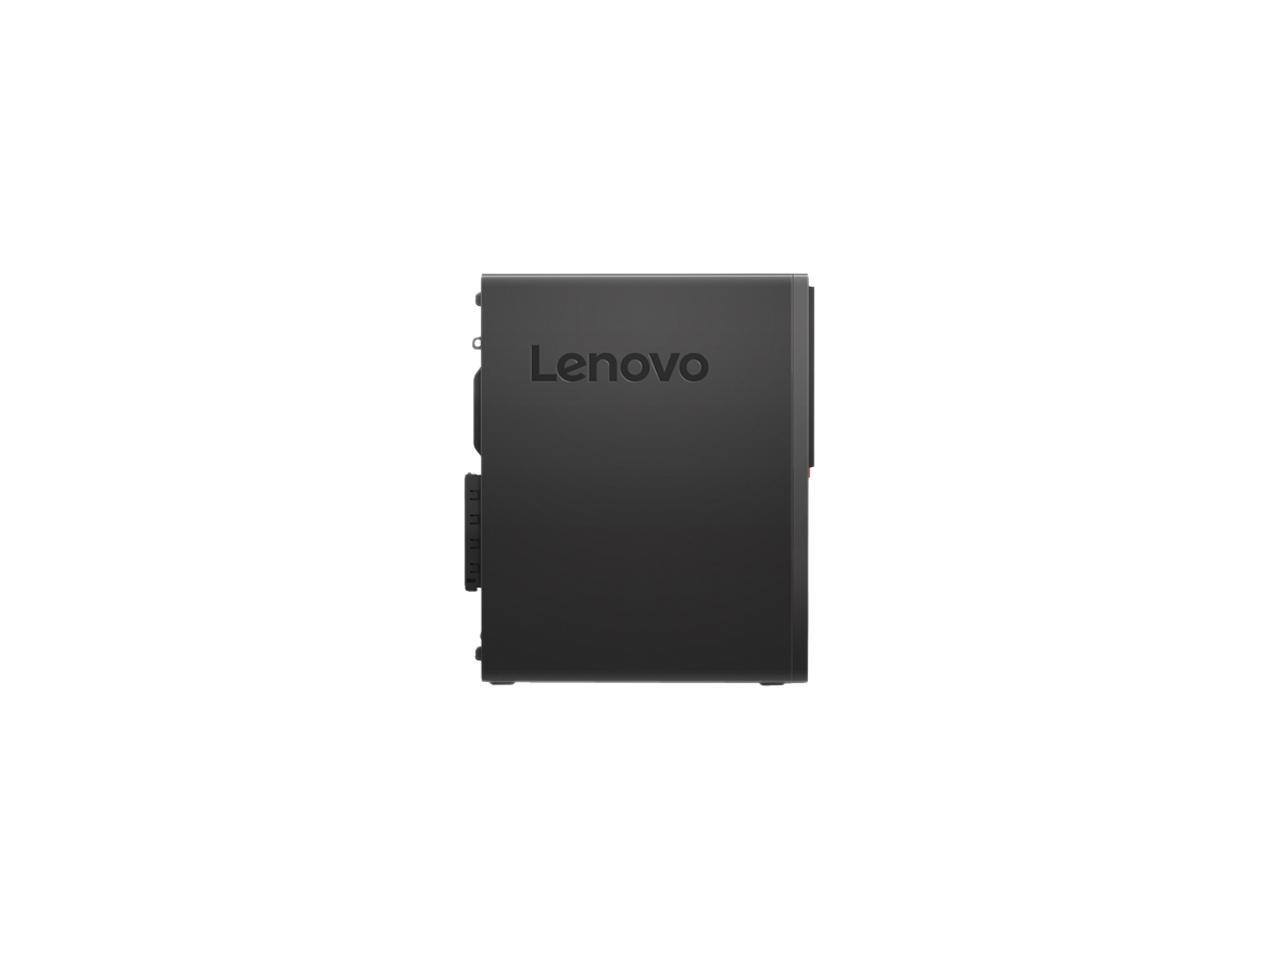 Lenovo Desktop Computer ThinkCentre M720 (10ST001XUS) Intel Core i5 8th Gen 8400 (2.80 GHz) 8 GB DDR4 1 TB HDD Intel UHD Graphics 630 Windows 10 Pro 64-Bit